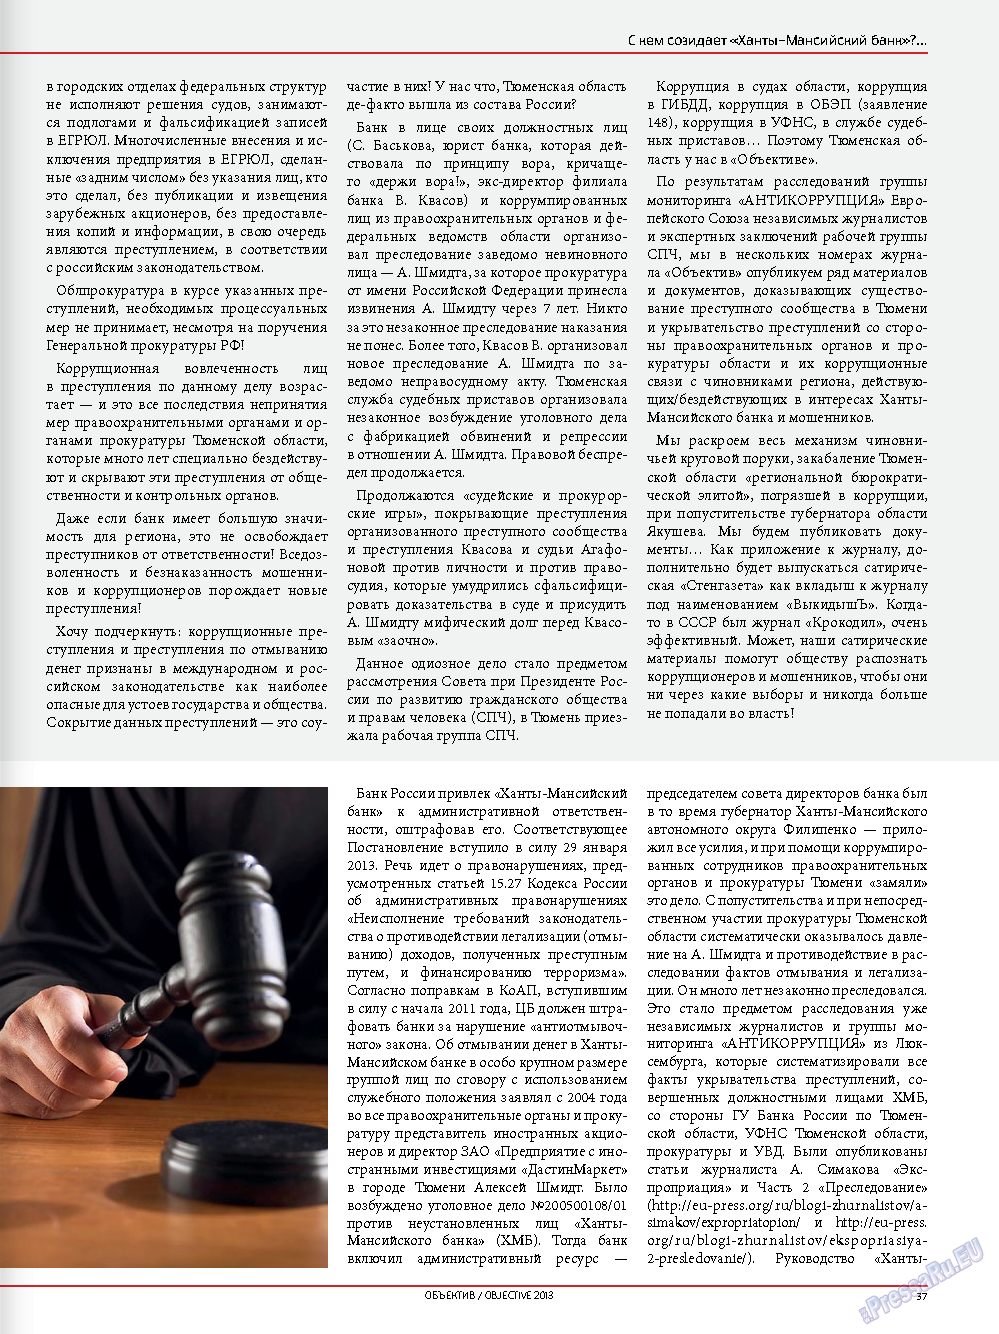 Объектив EU, журнал. 2013 №1 стр.39